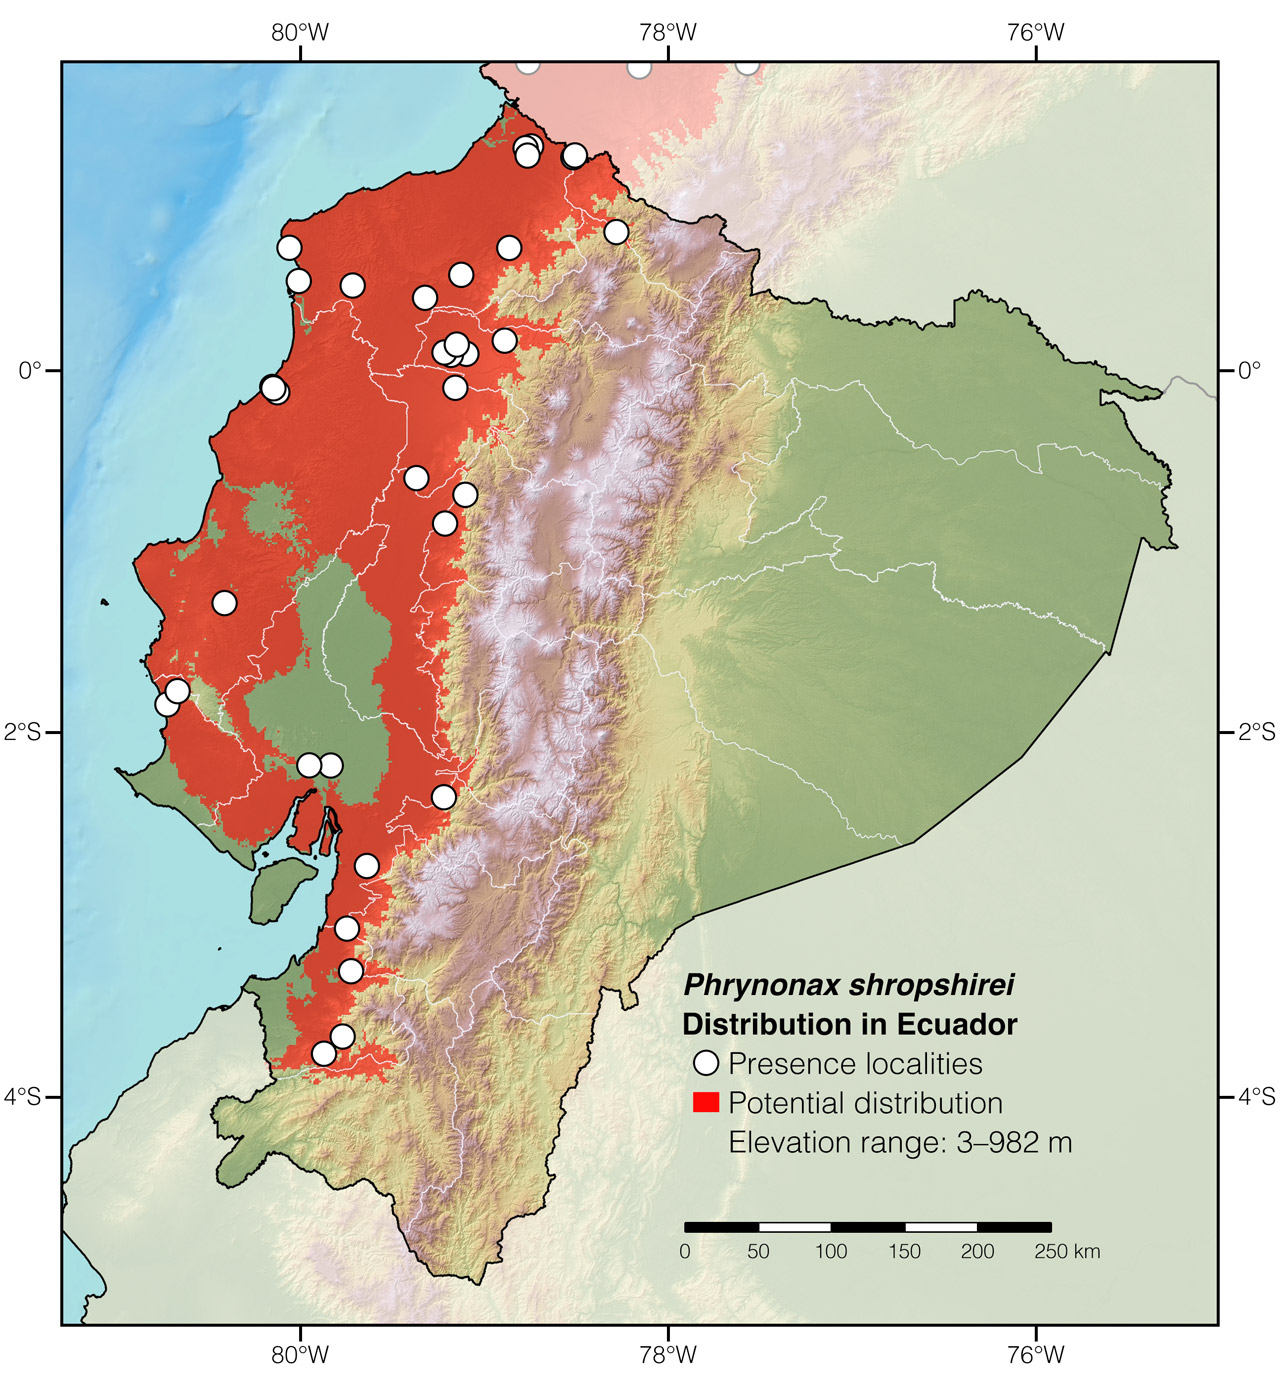 Distribution of Phrynonax shropshirei in Ecuador